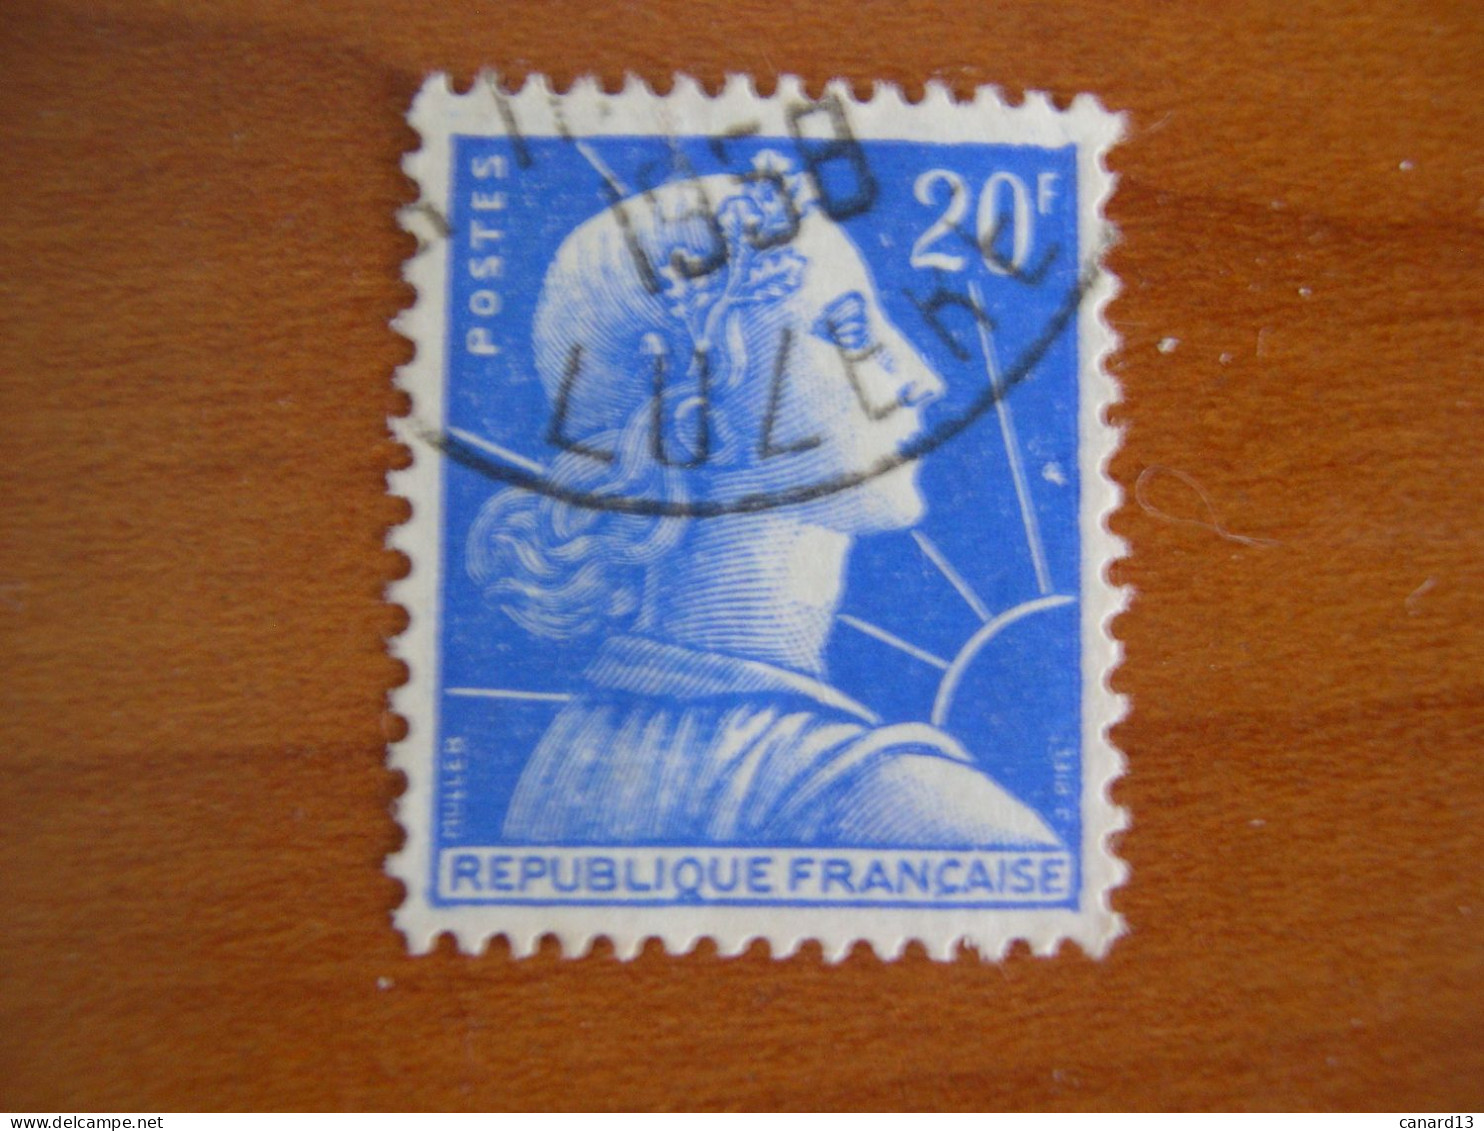 France Obl   N° 1011B - 1955-1961 Marianne (Muller)